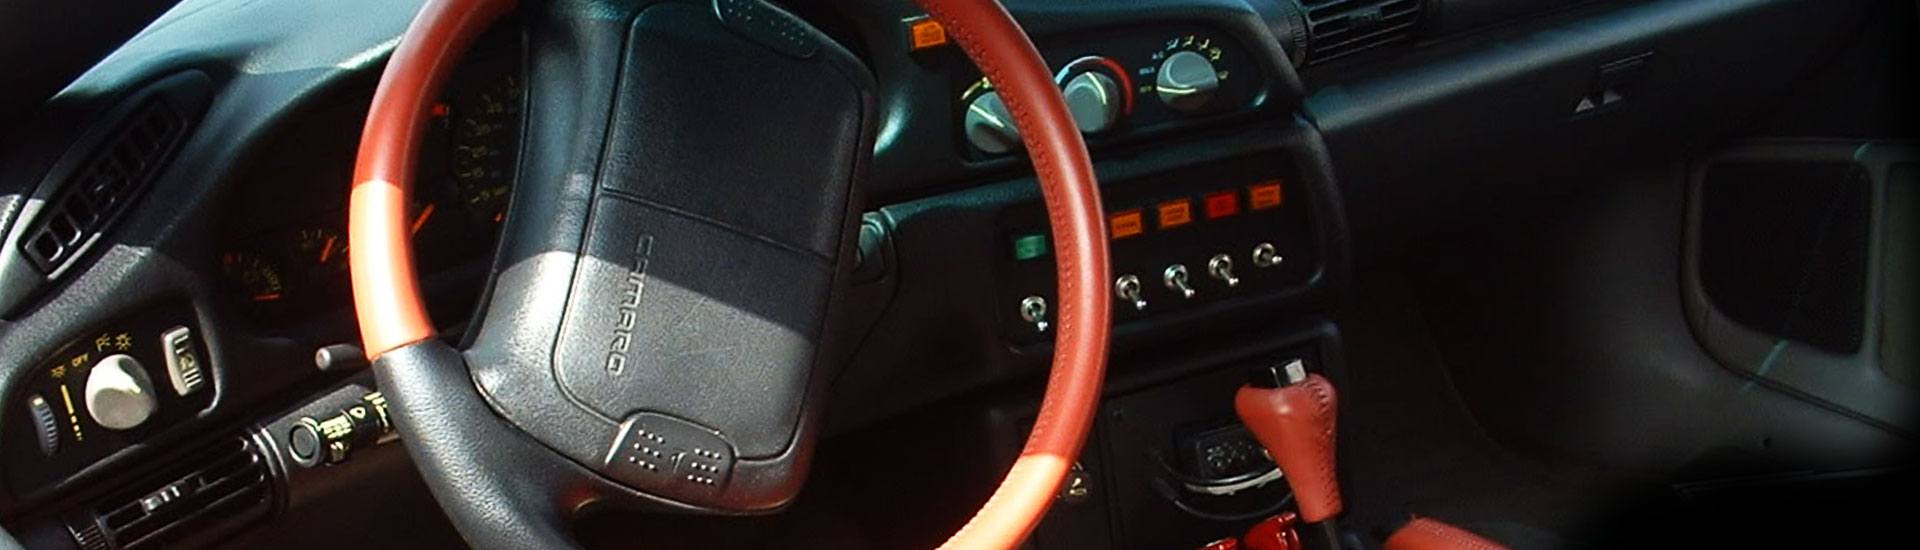 1993 Chevrolet Camaro Dash Kits